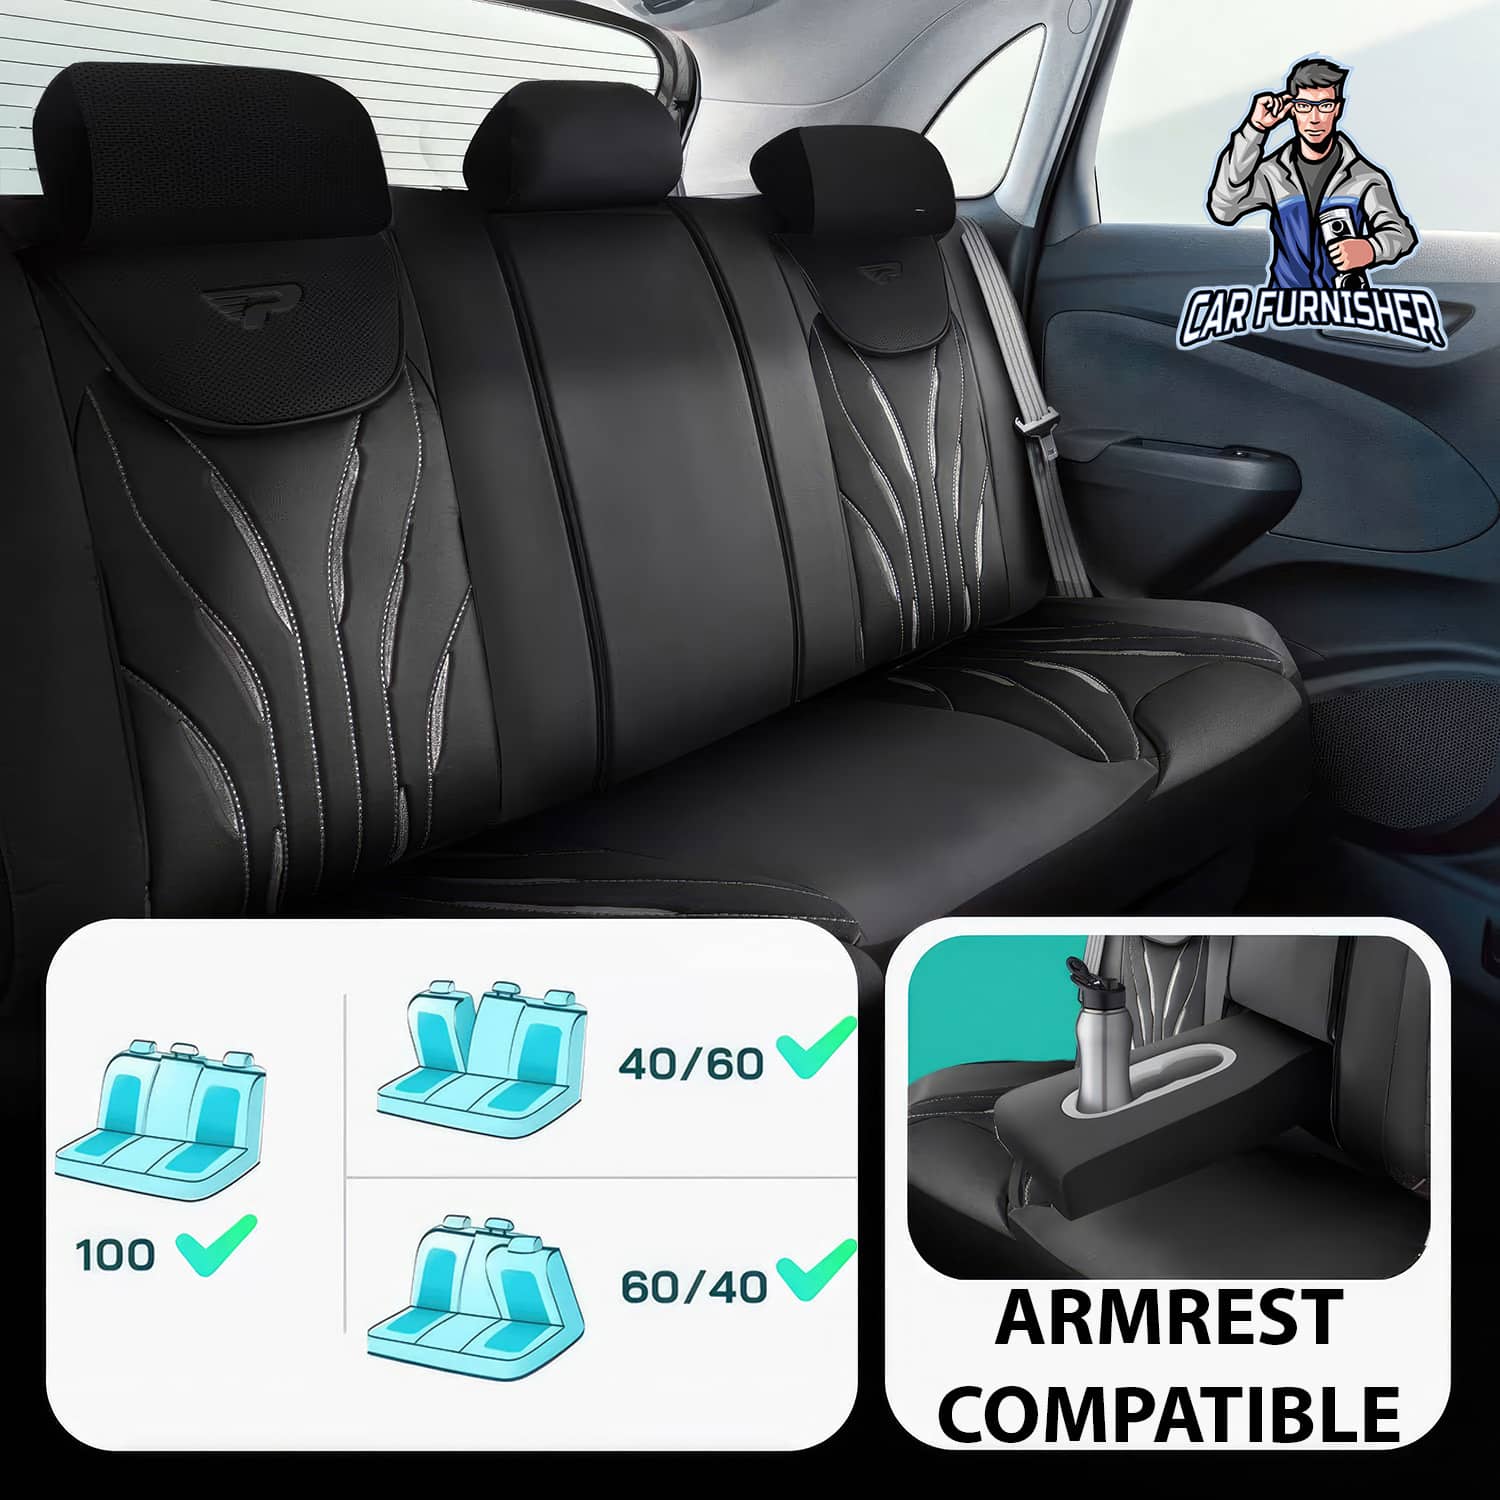 Car Seat Cover Set - Pars Design Gray 5 Seats + Headrests (Full Set) Full Leather